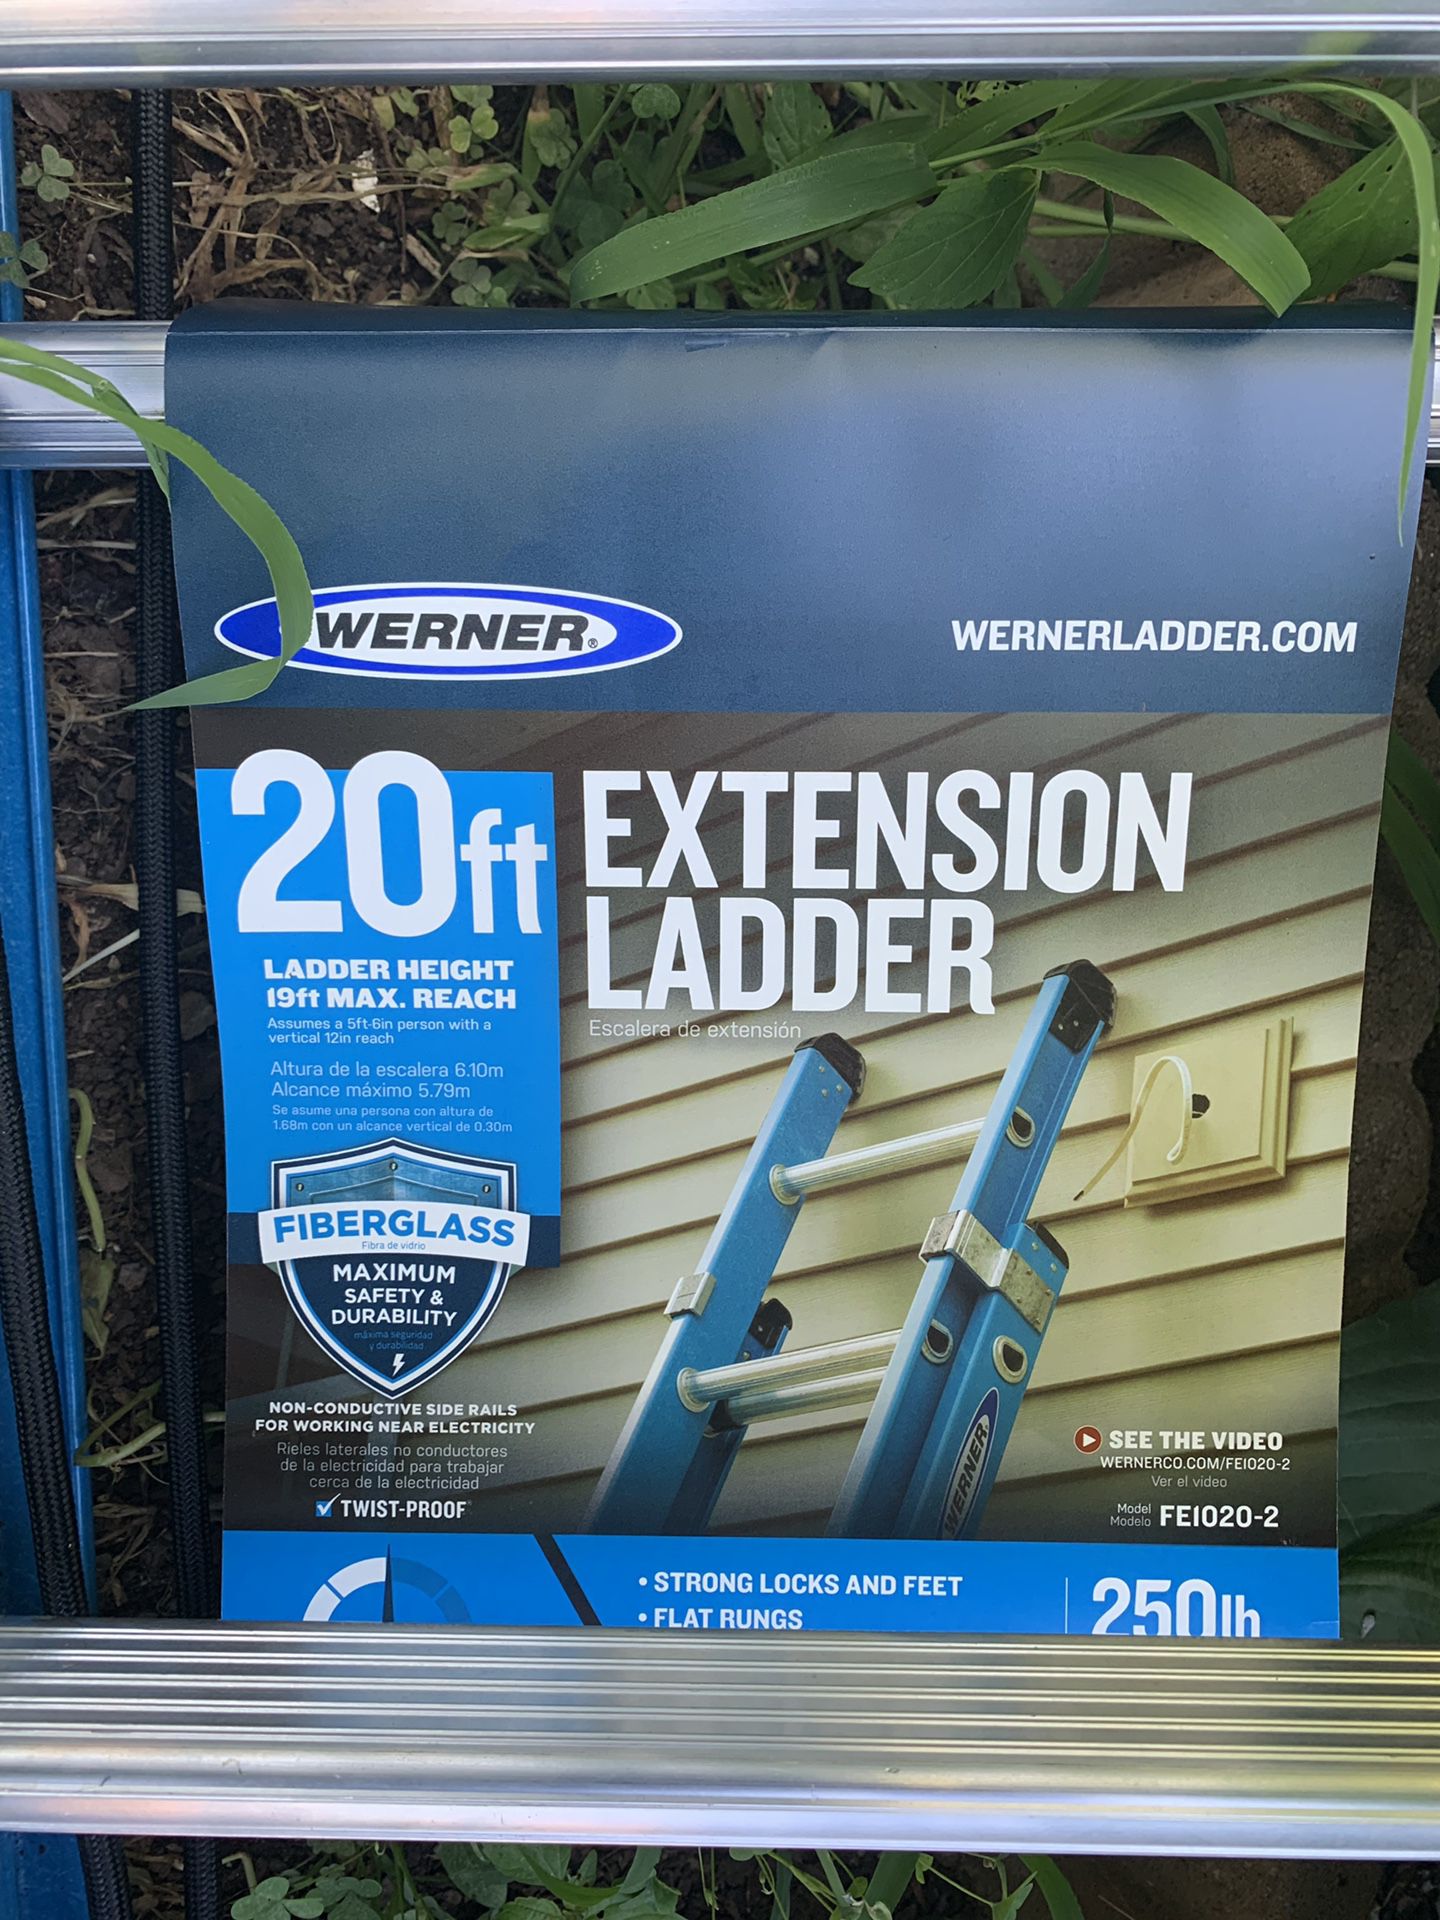 Werner extension ladder fiberglass